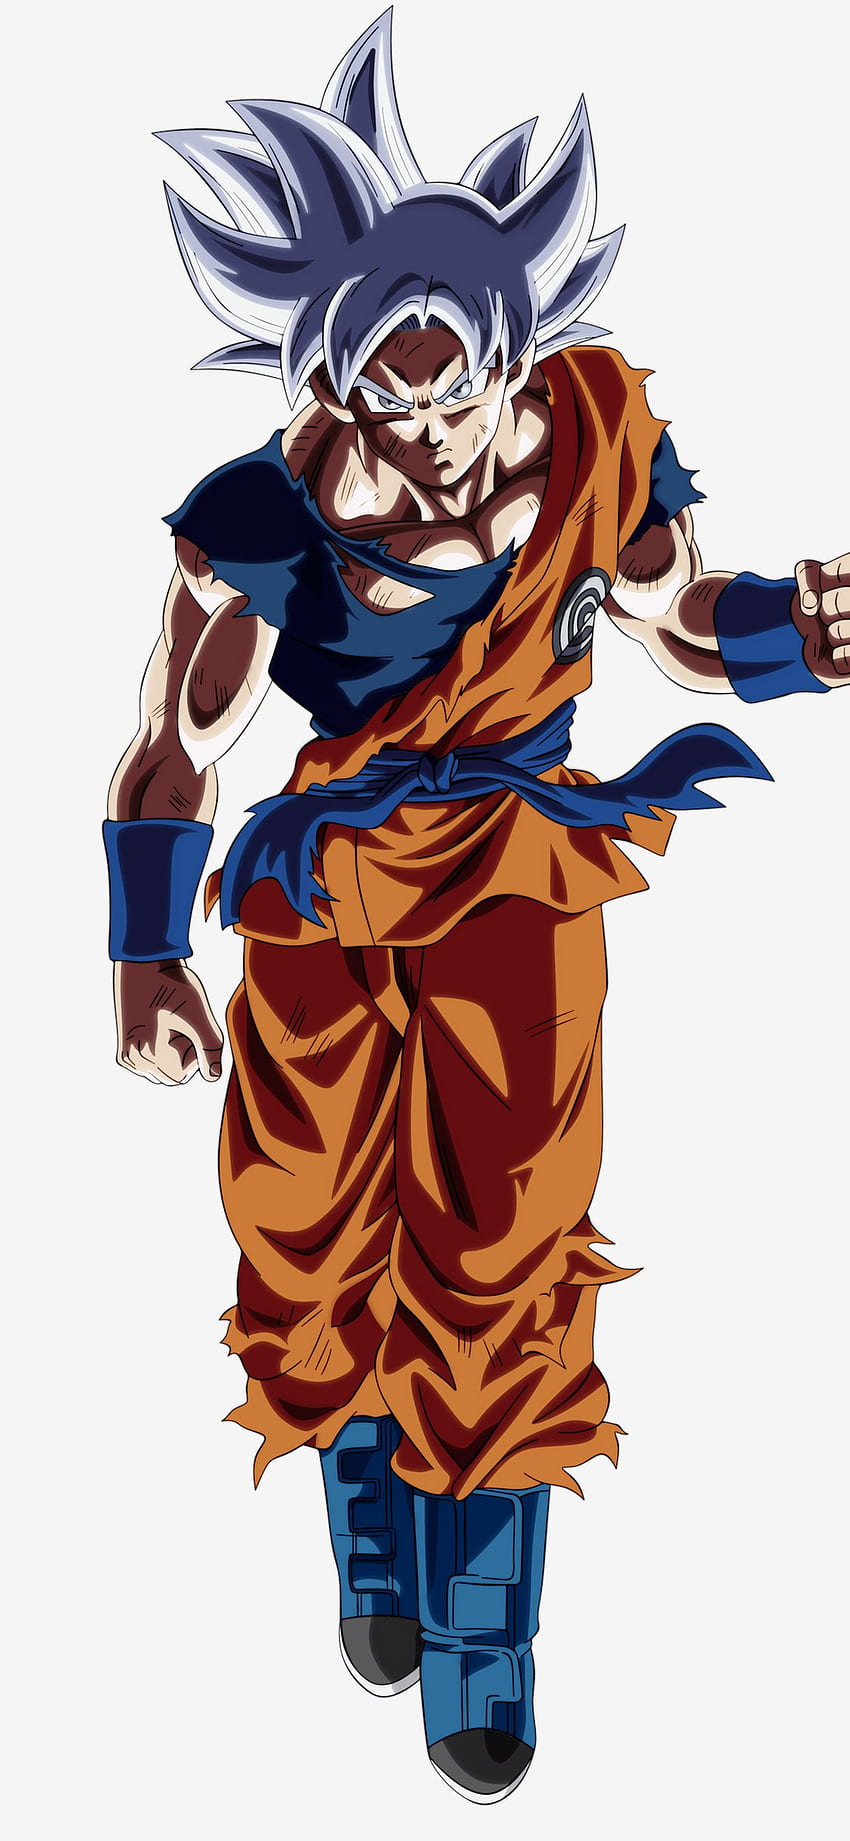 How to Draw Goku super Saiyan God [full body] | pencil sketch - YouTube